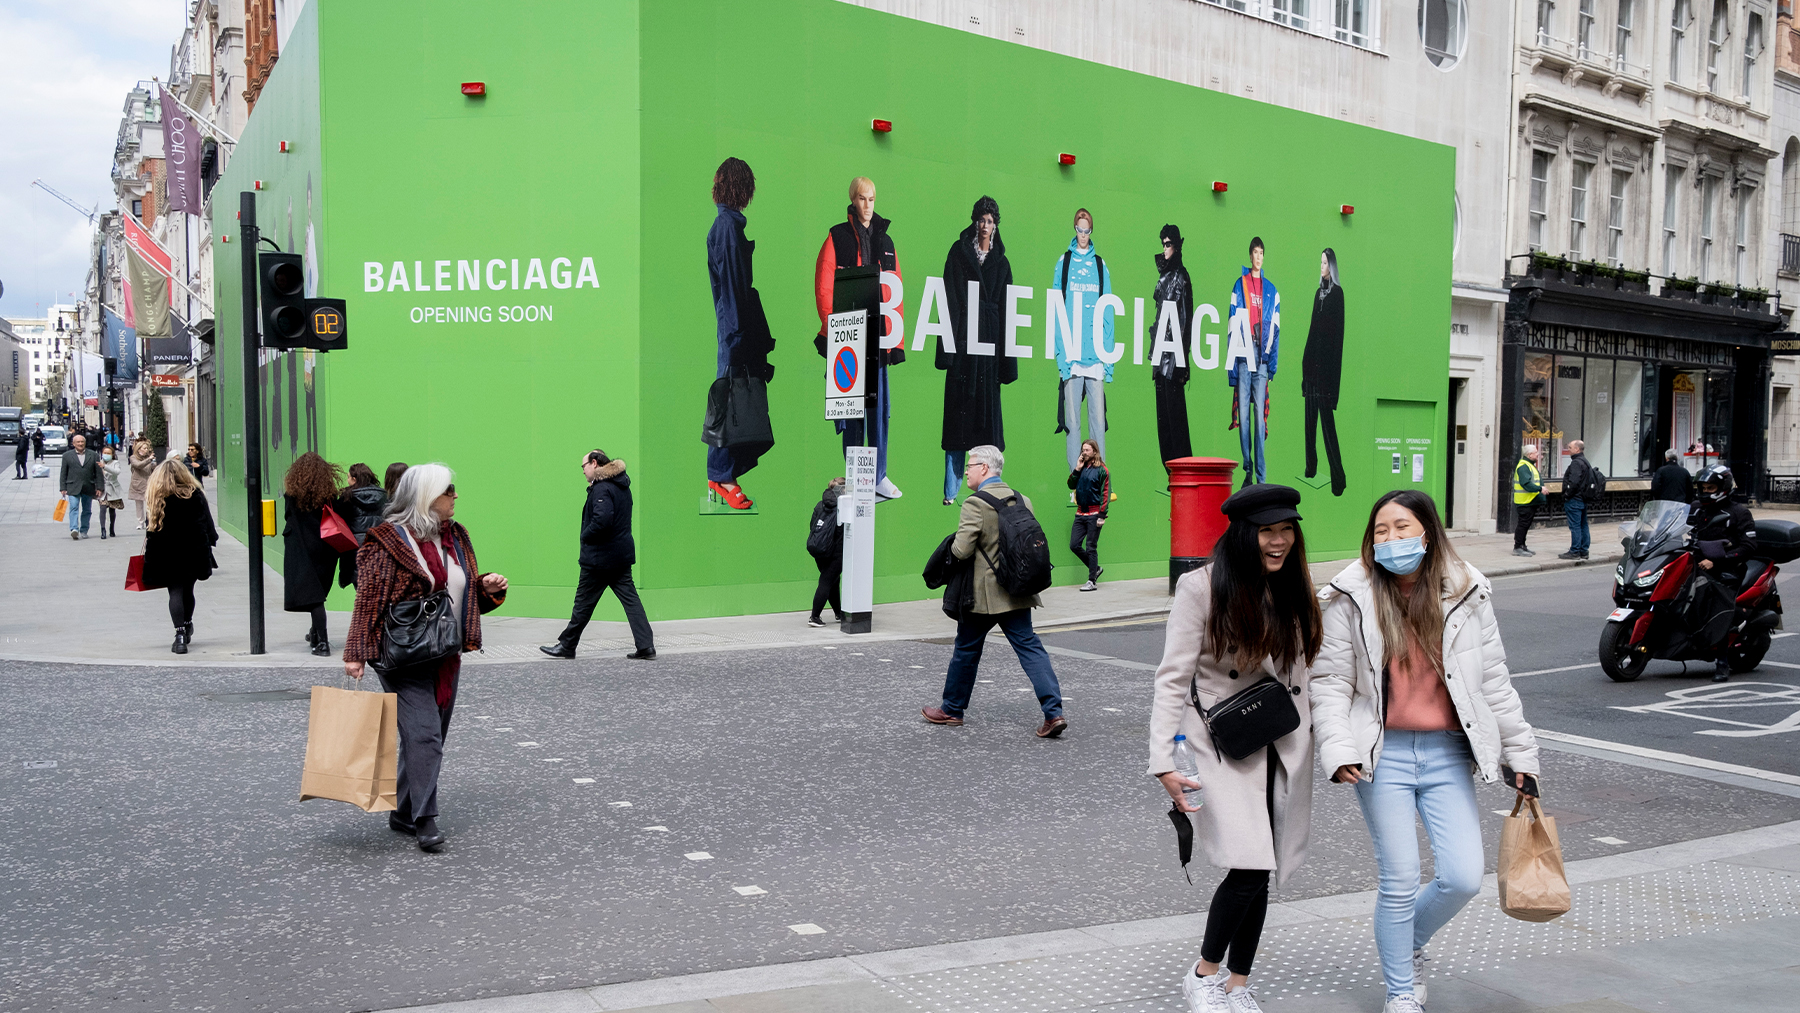 Decoding the Marketing Mix of Balenciaga